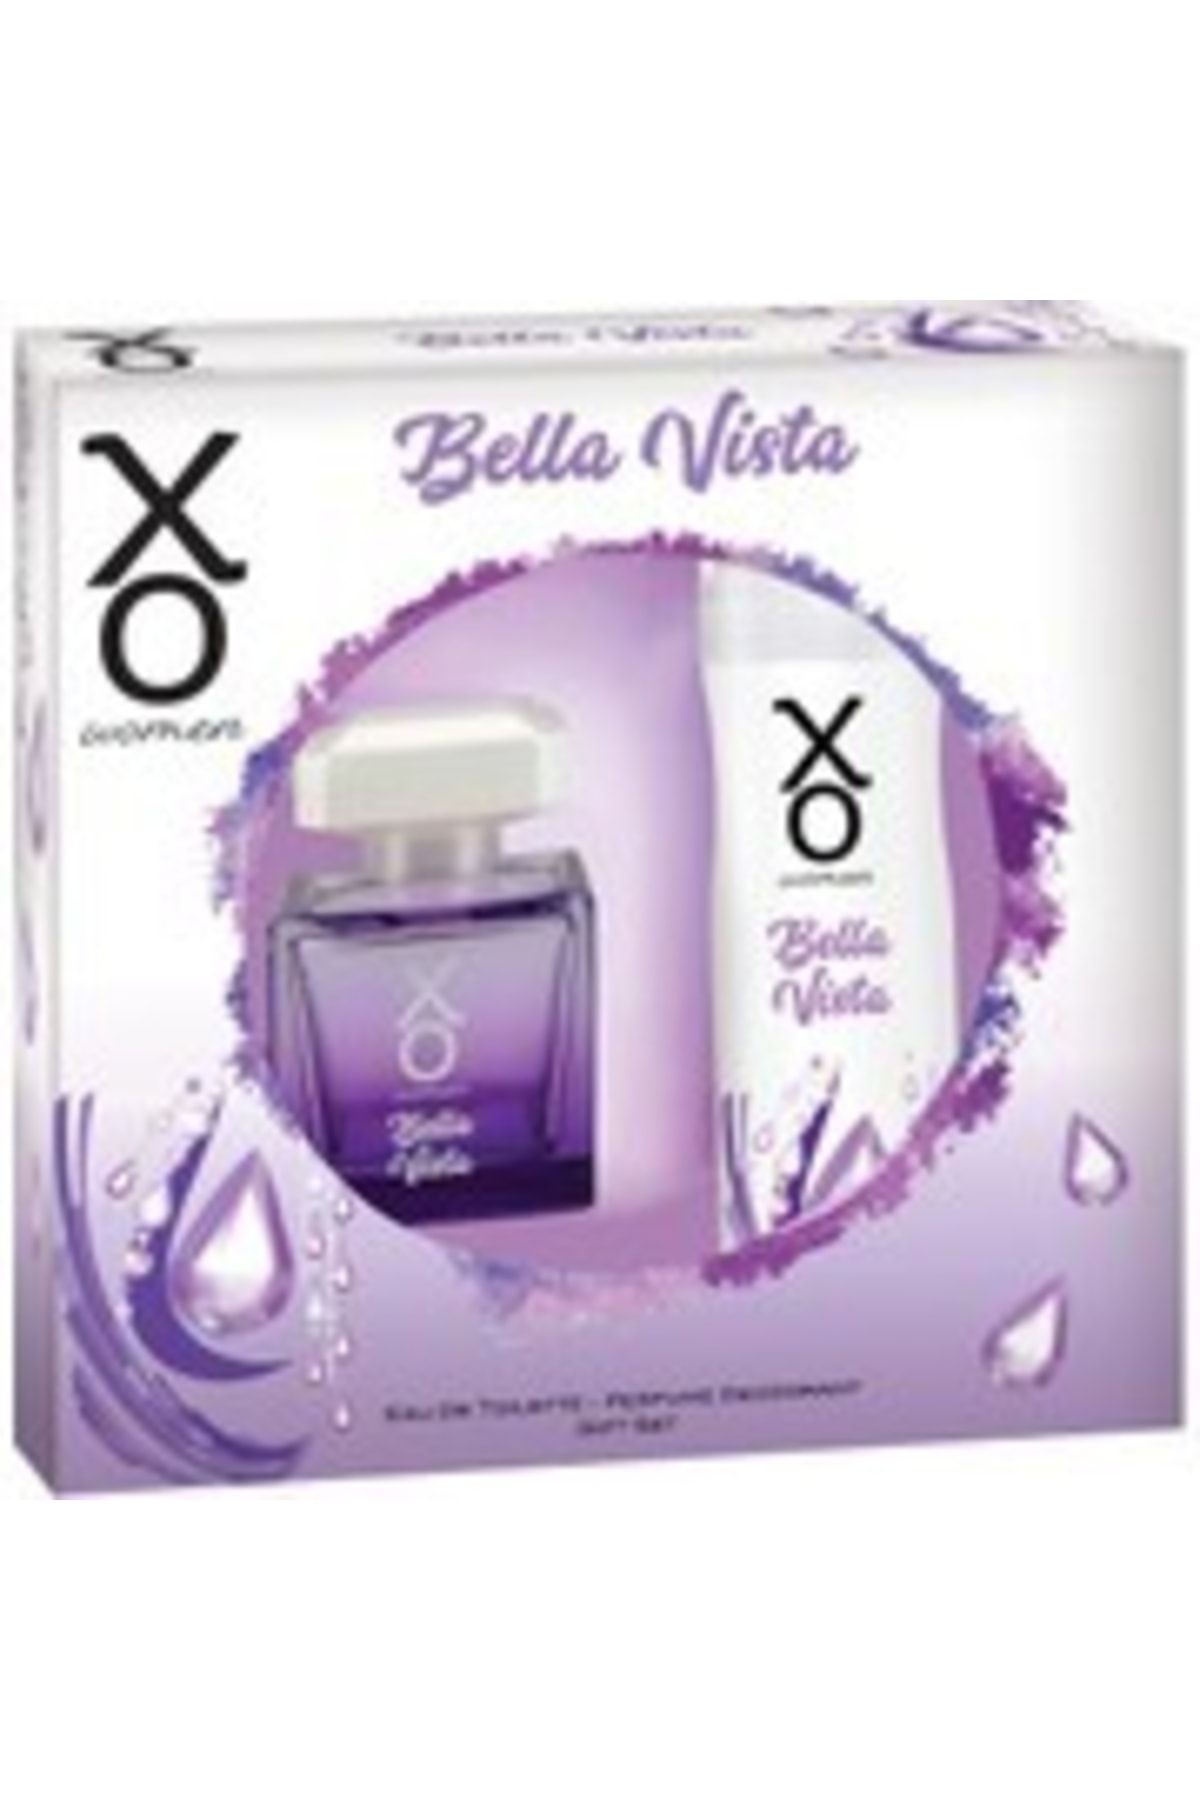 Xo Bella Vista Kadın Parfüm Seti 100 ml Edt + 125 ml Deodorant Ikili Set